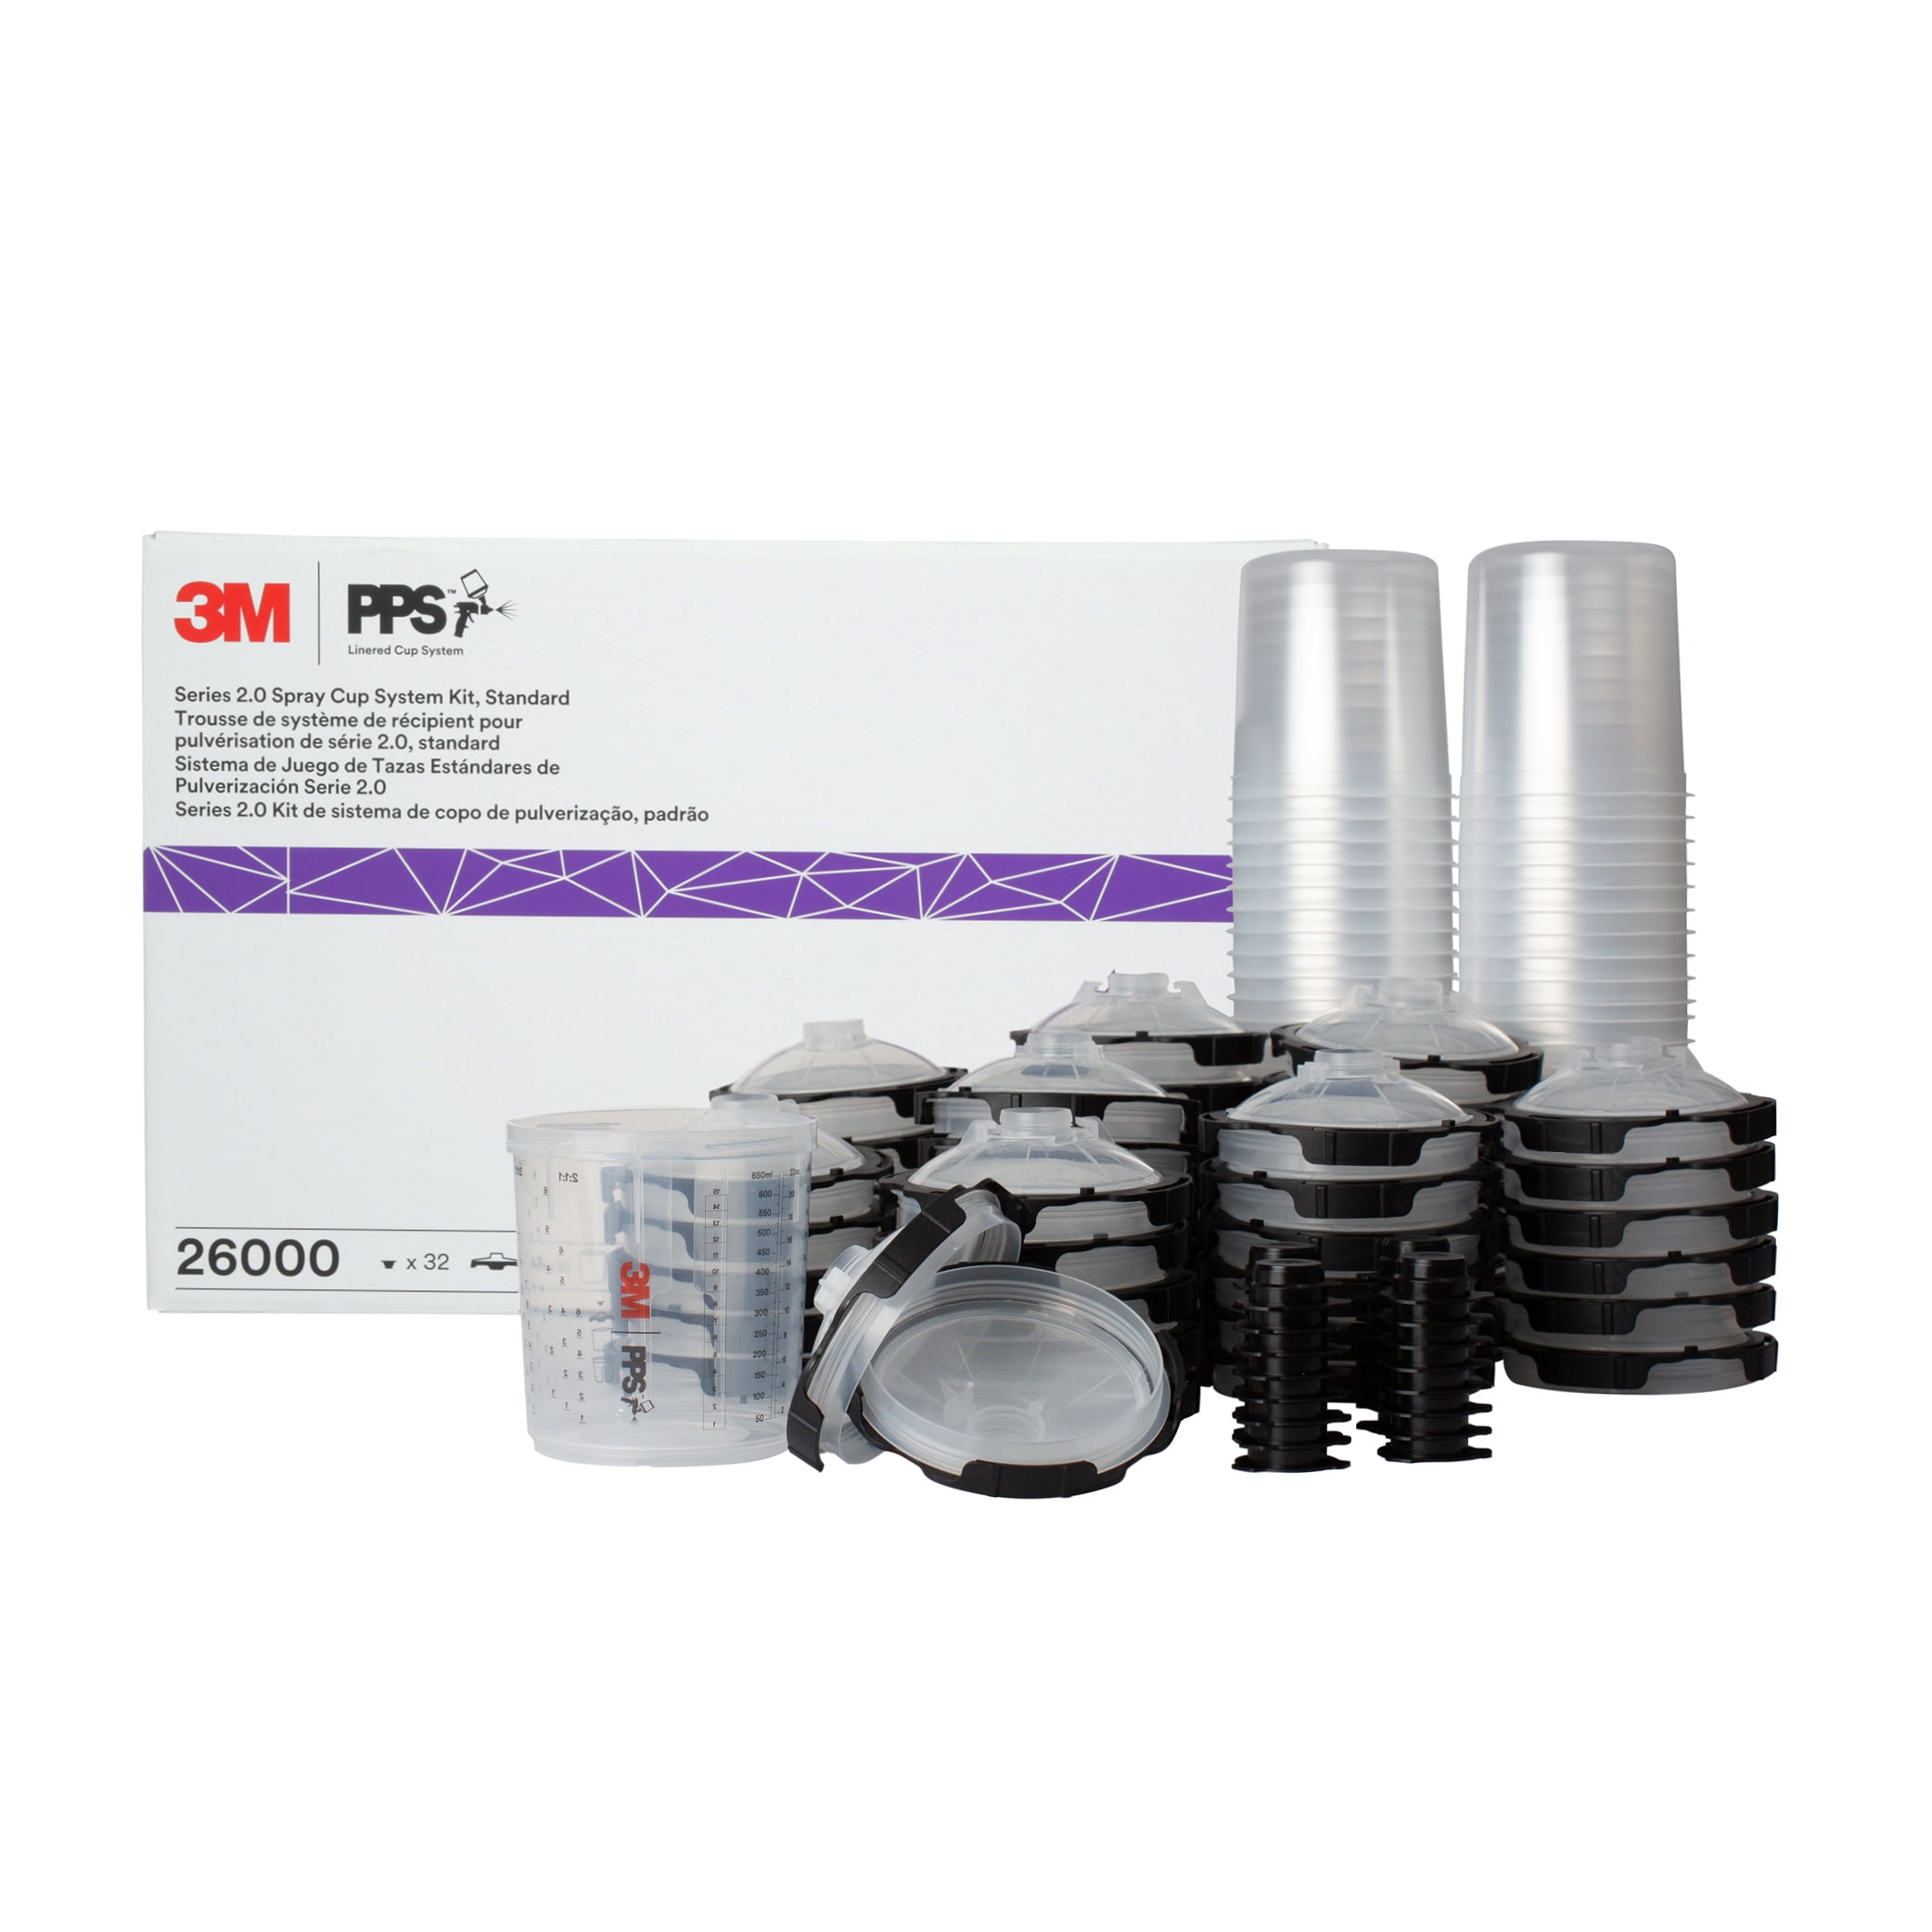 3M 26000 PPS Series 2.0 Spray Cup System Kit Standard 22 fl oz 200 Micron Filter 